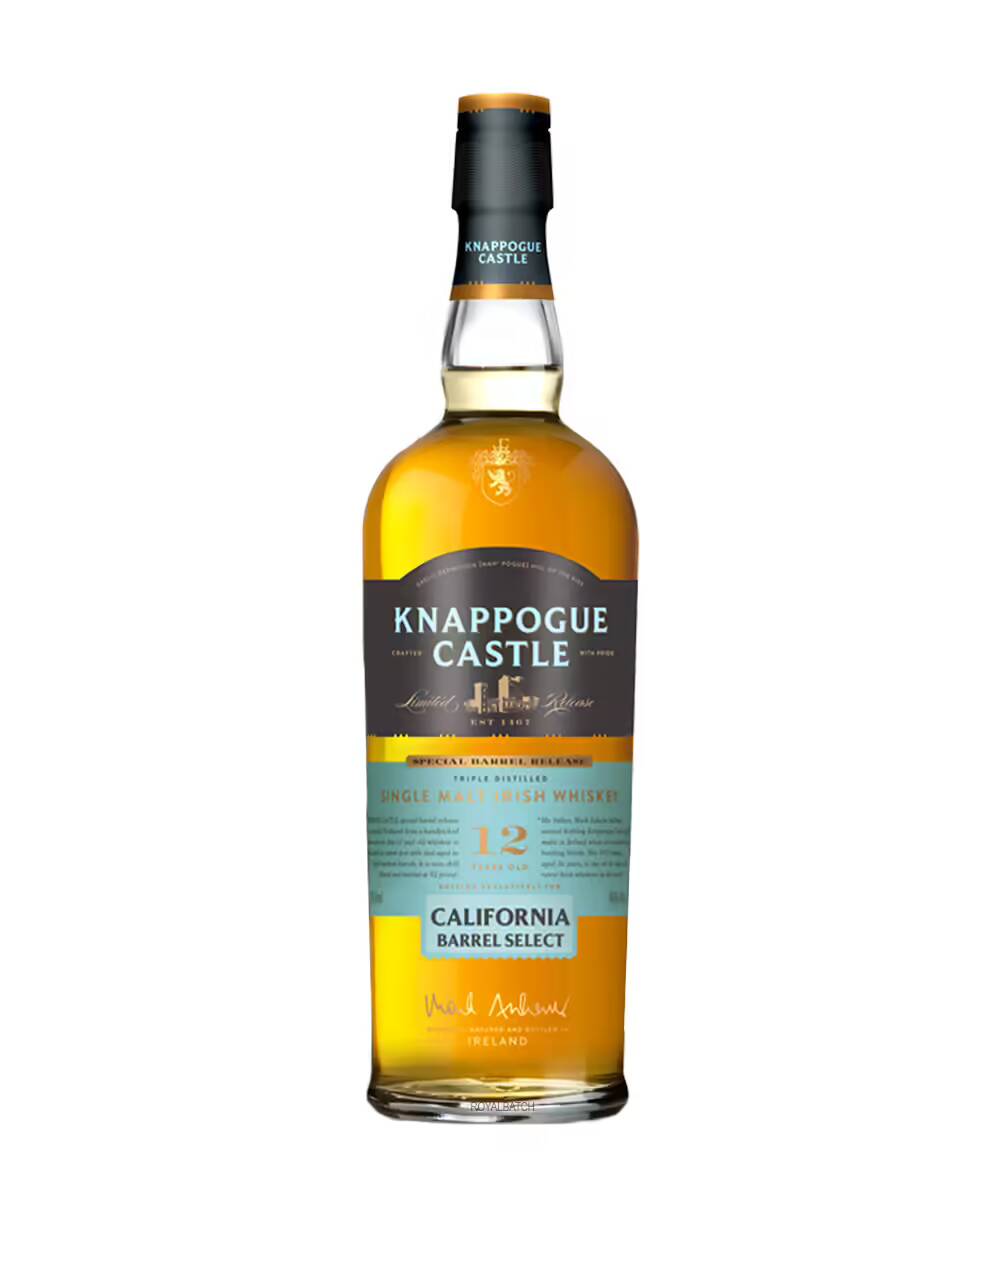 Knappogue Castle California Barrel Select Limited Release 12 Year Old Single Malt Irish Whiskey 